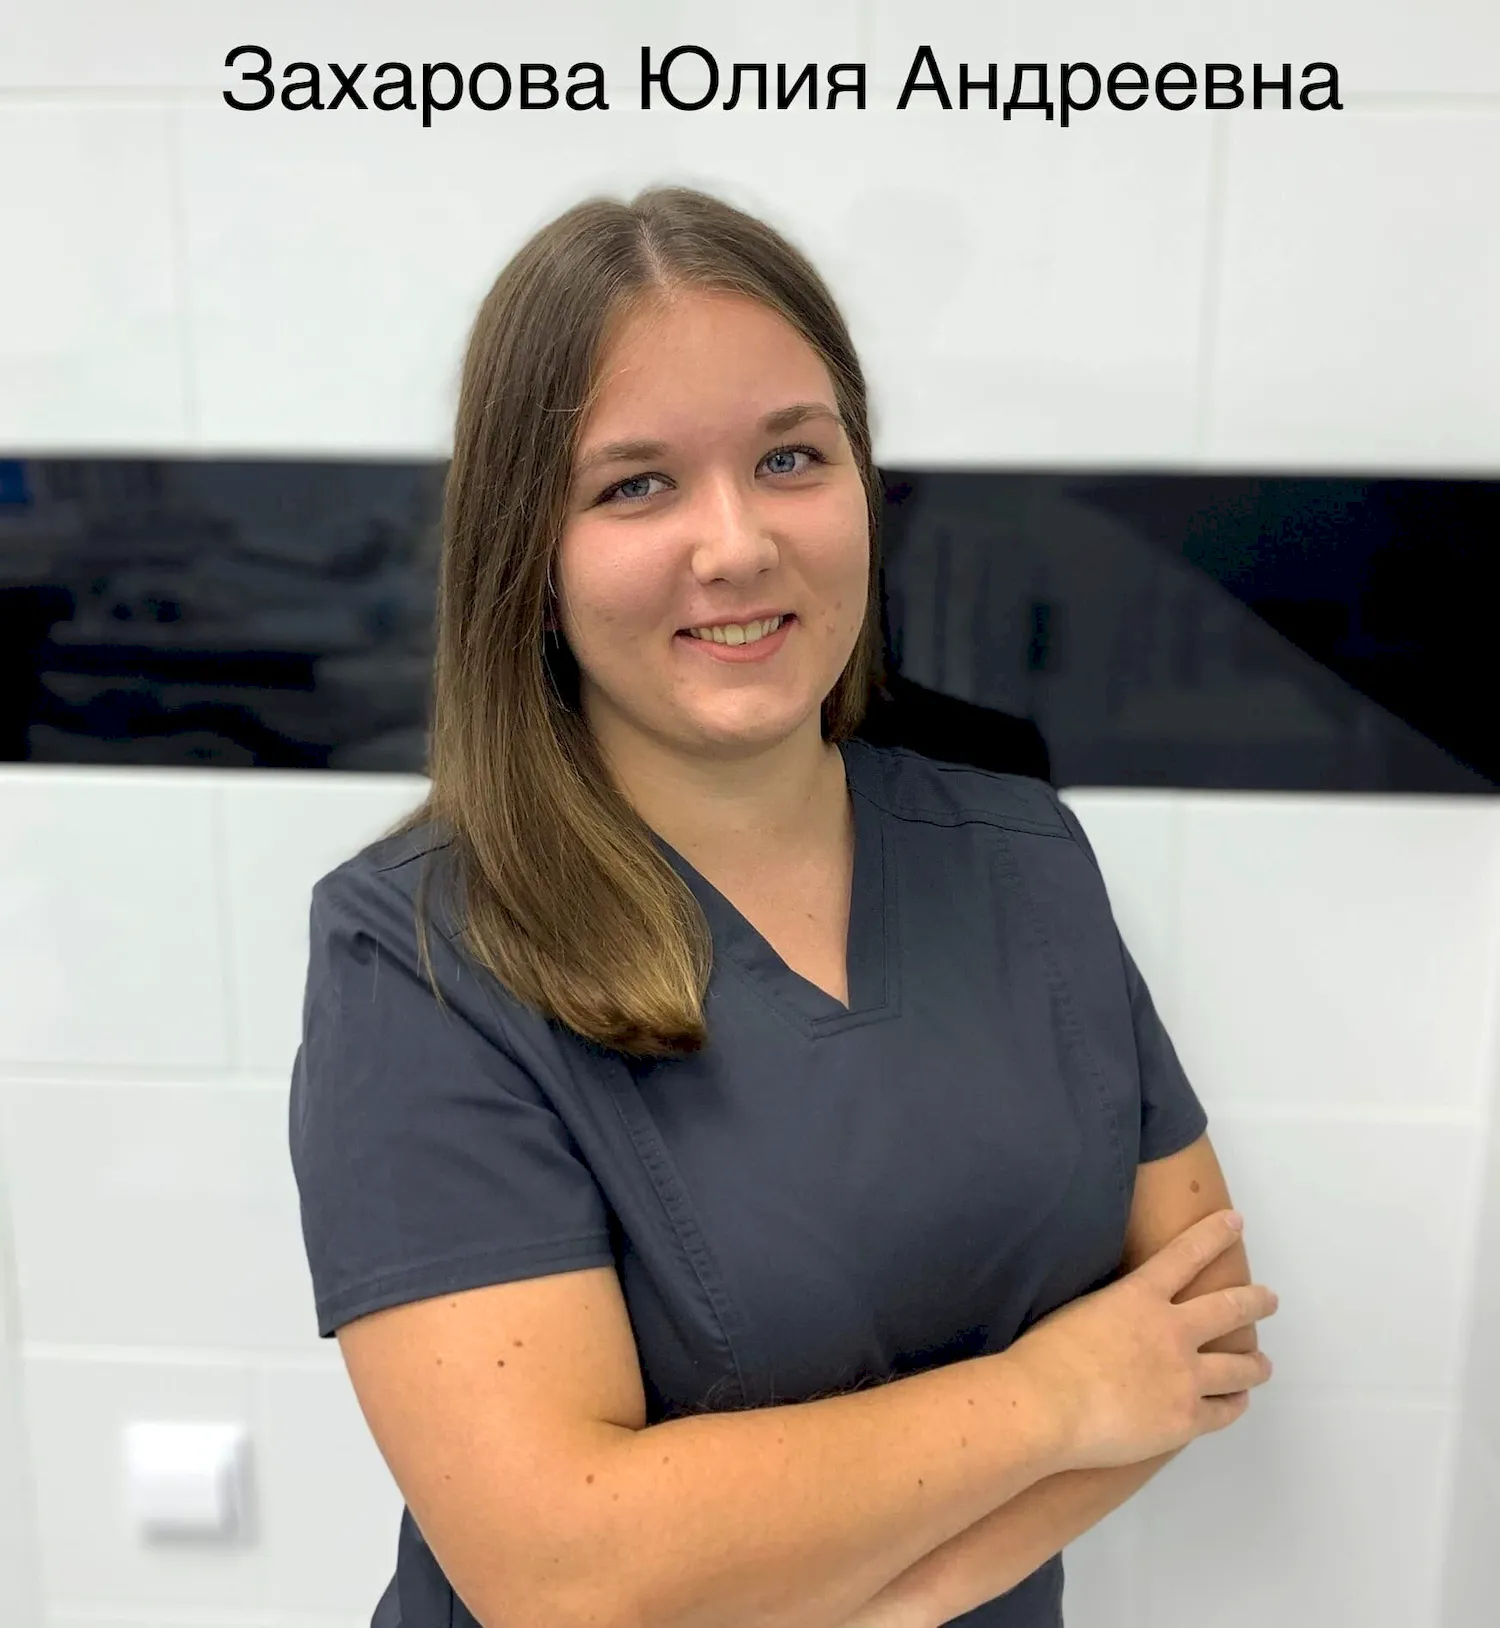 Юлия Андреевна стоматолог